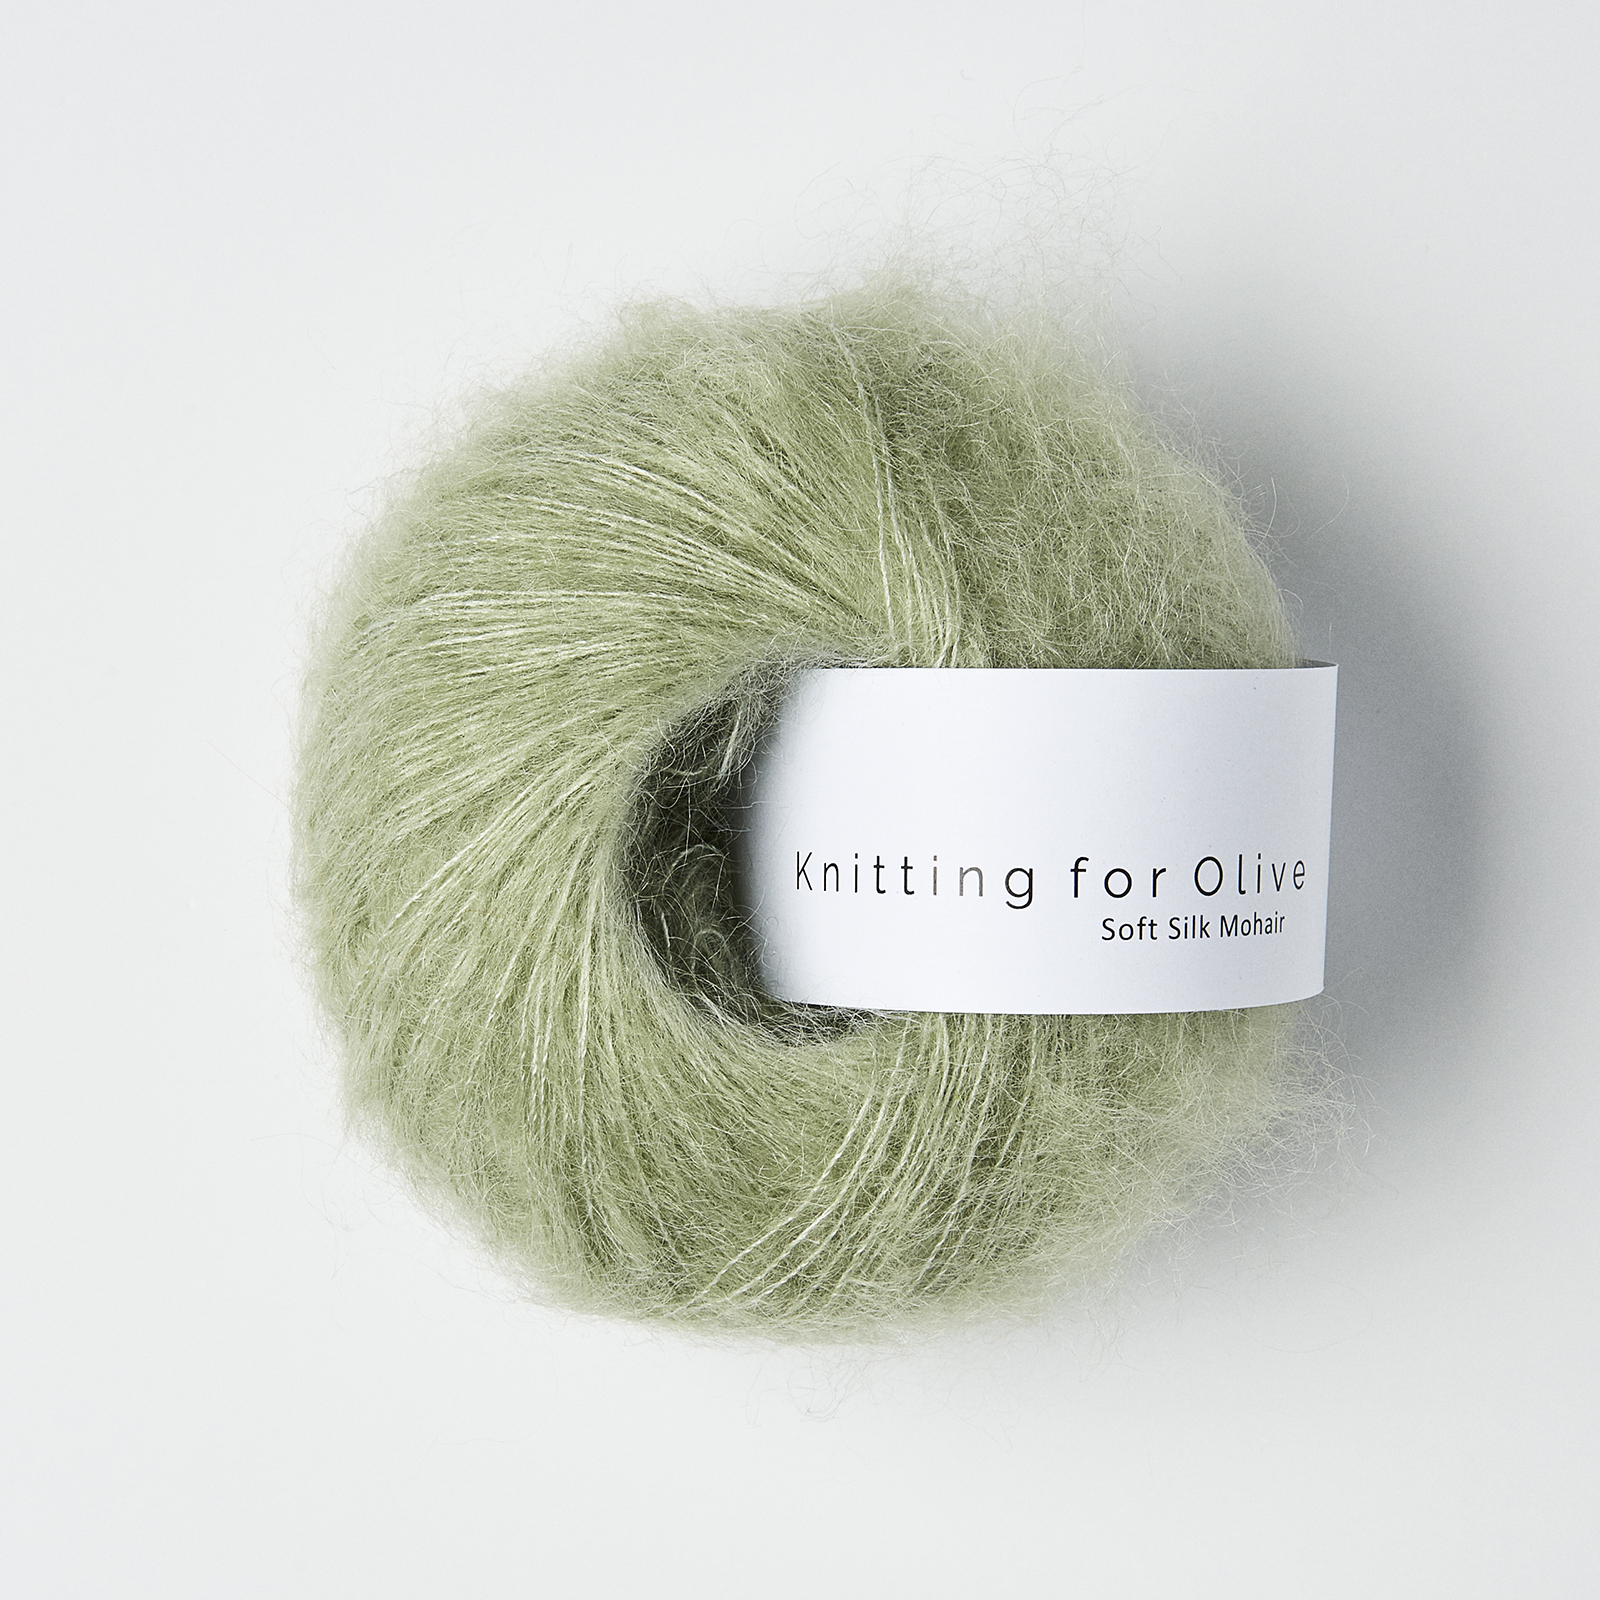 soft silk mohair knitting for olive | soft silk mohair: dusty artichoke